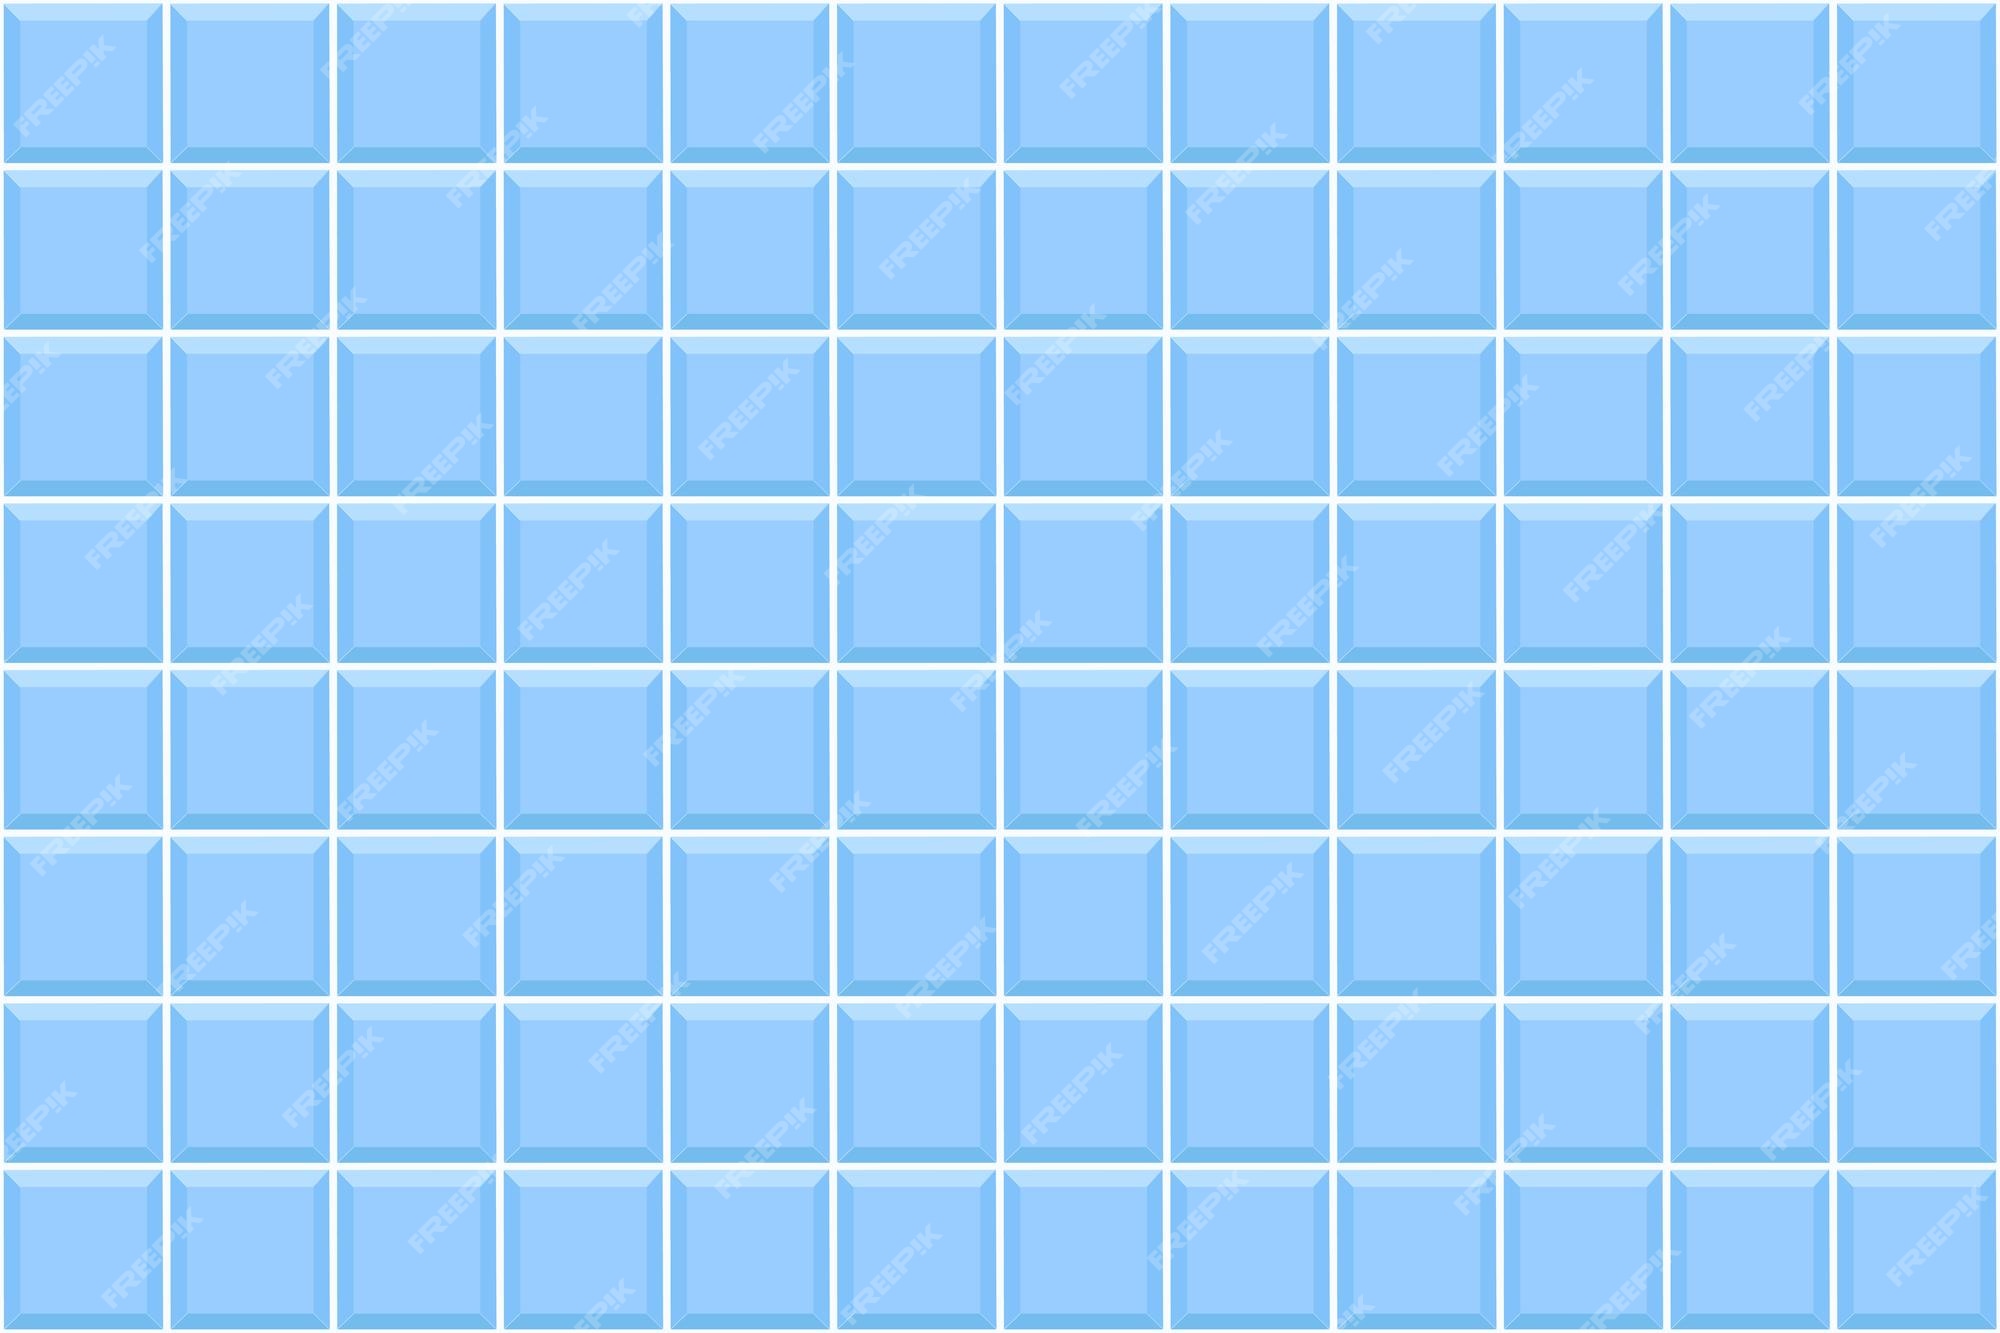 Pool Tile Texture Images - Free Download on Freepik